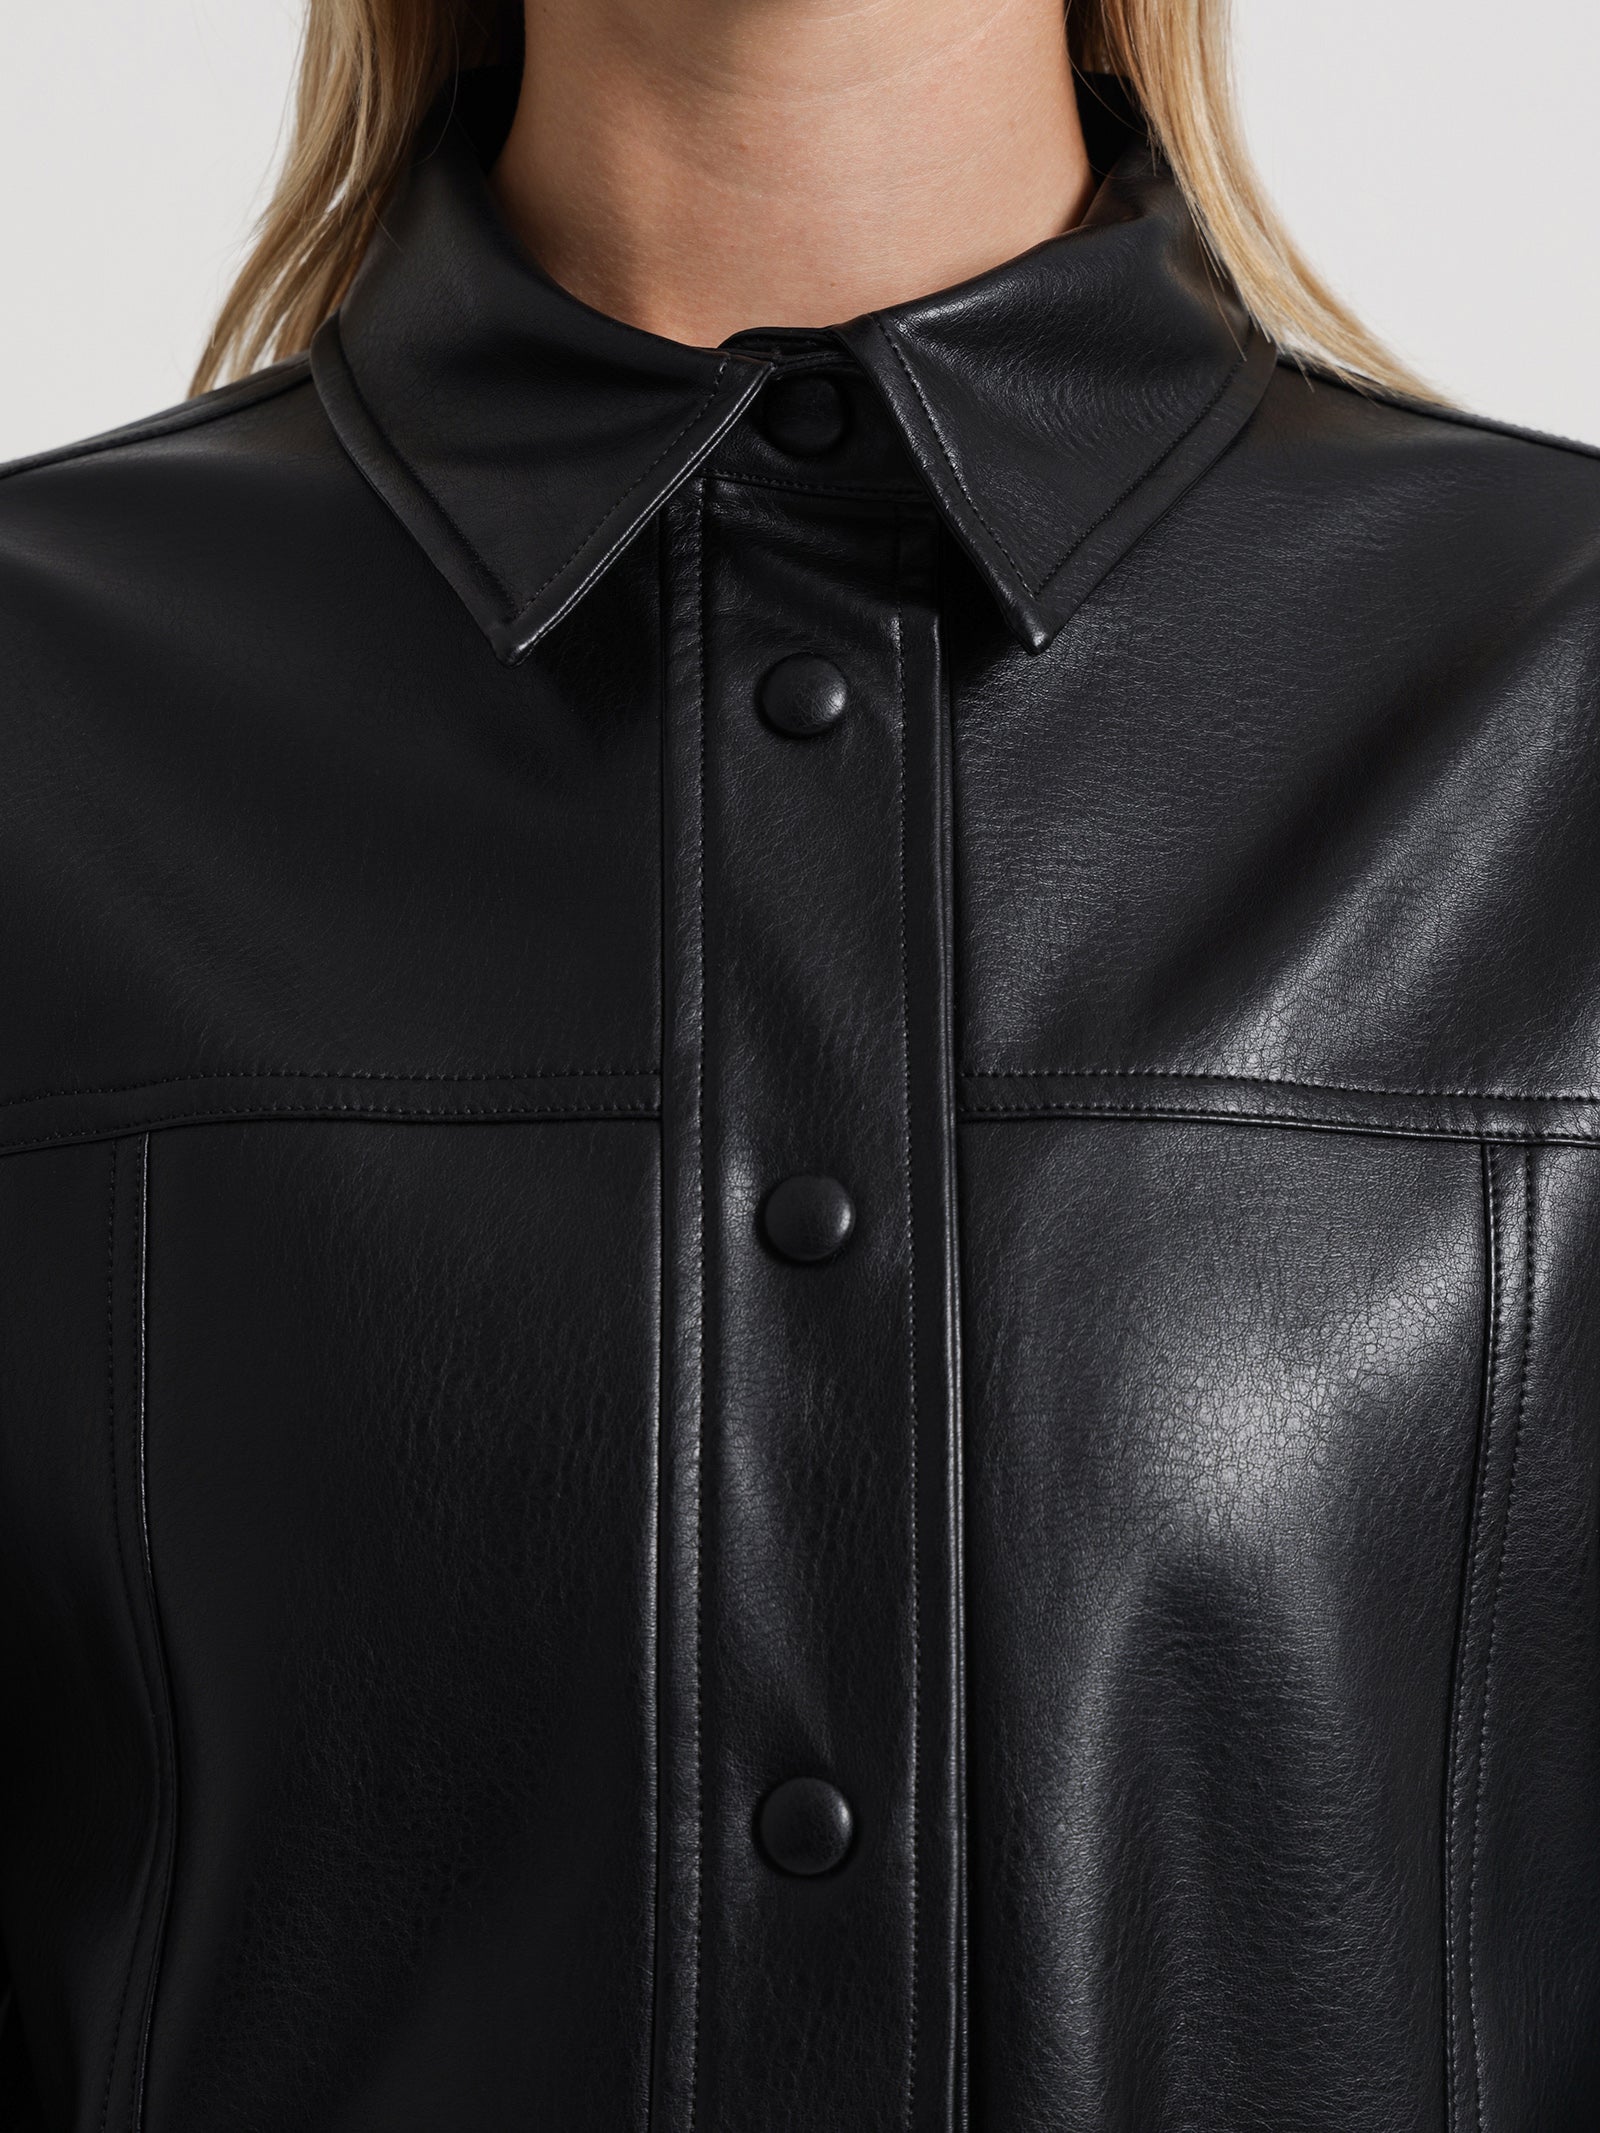 Zima Faux Leather Shacket in Black